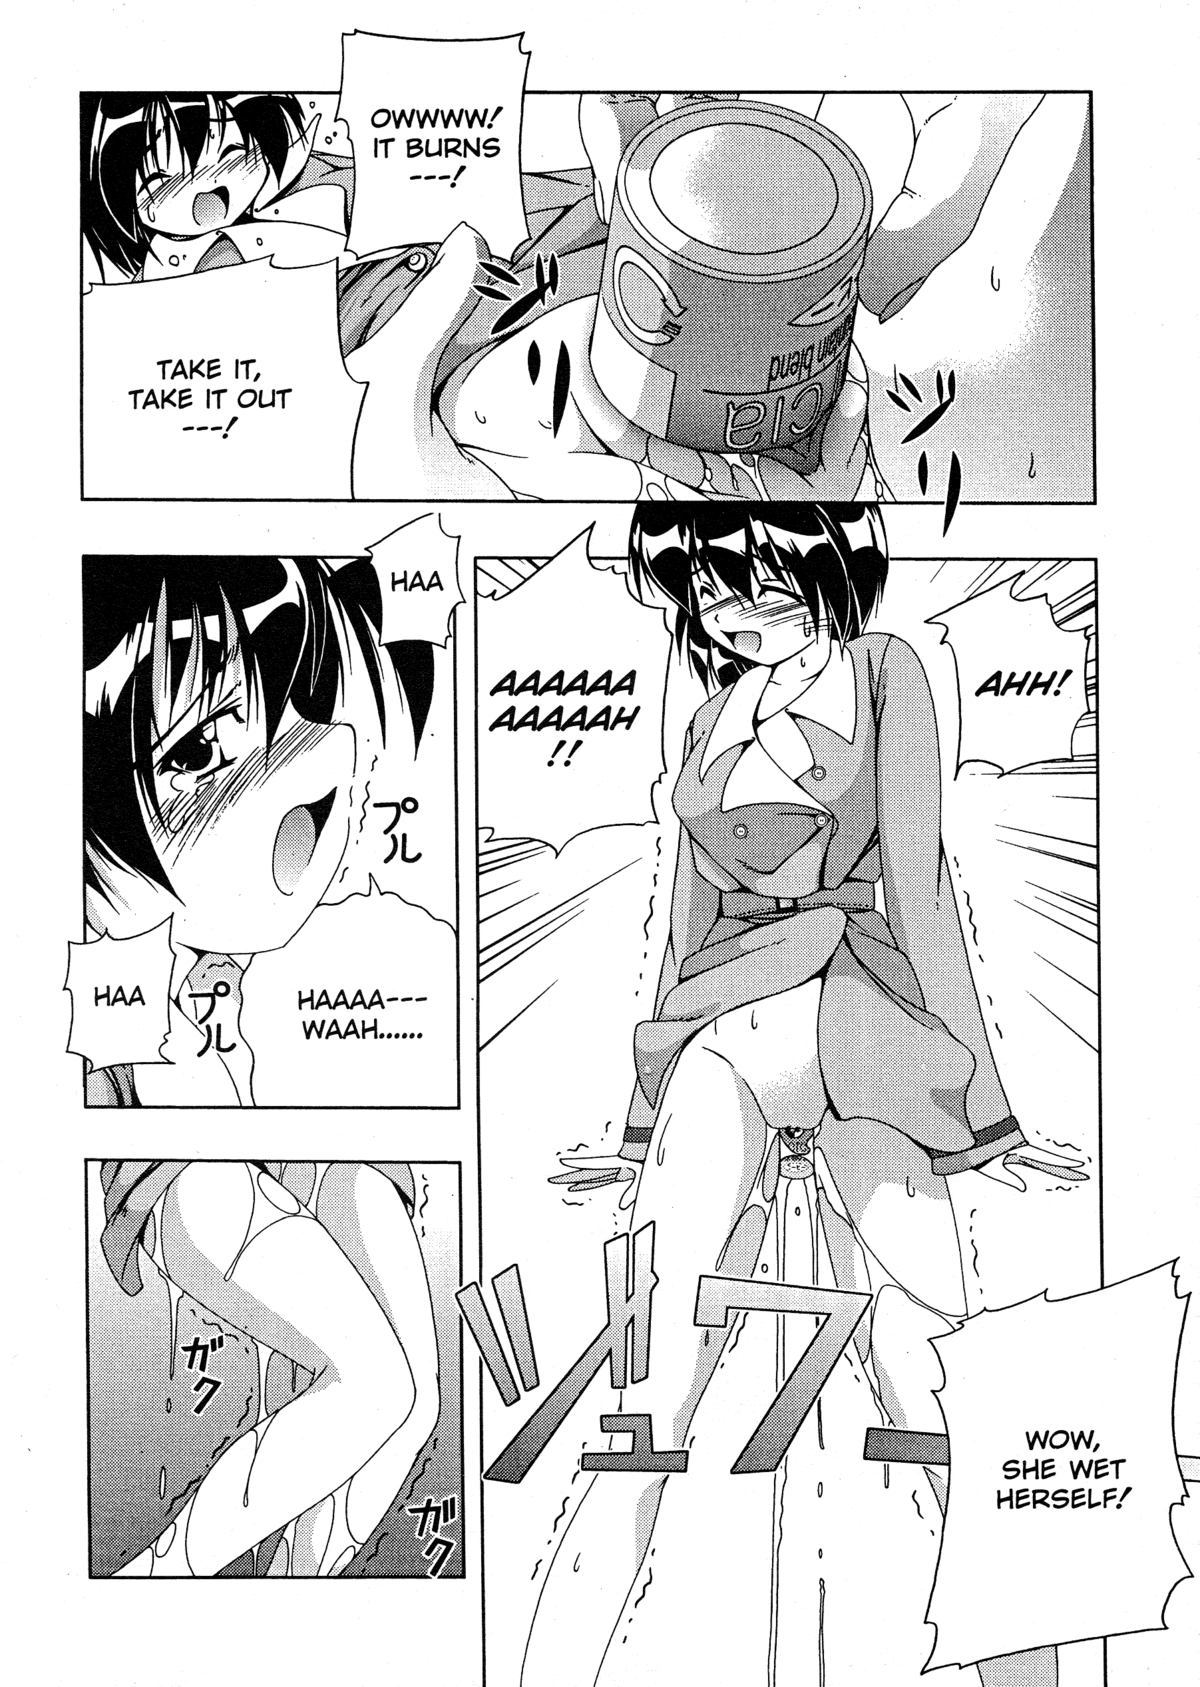 Flashbang!Hi-res 24 hentai manga